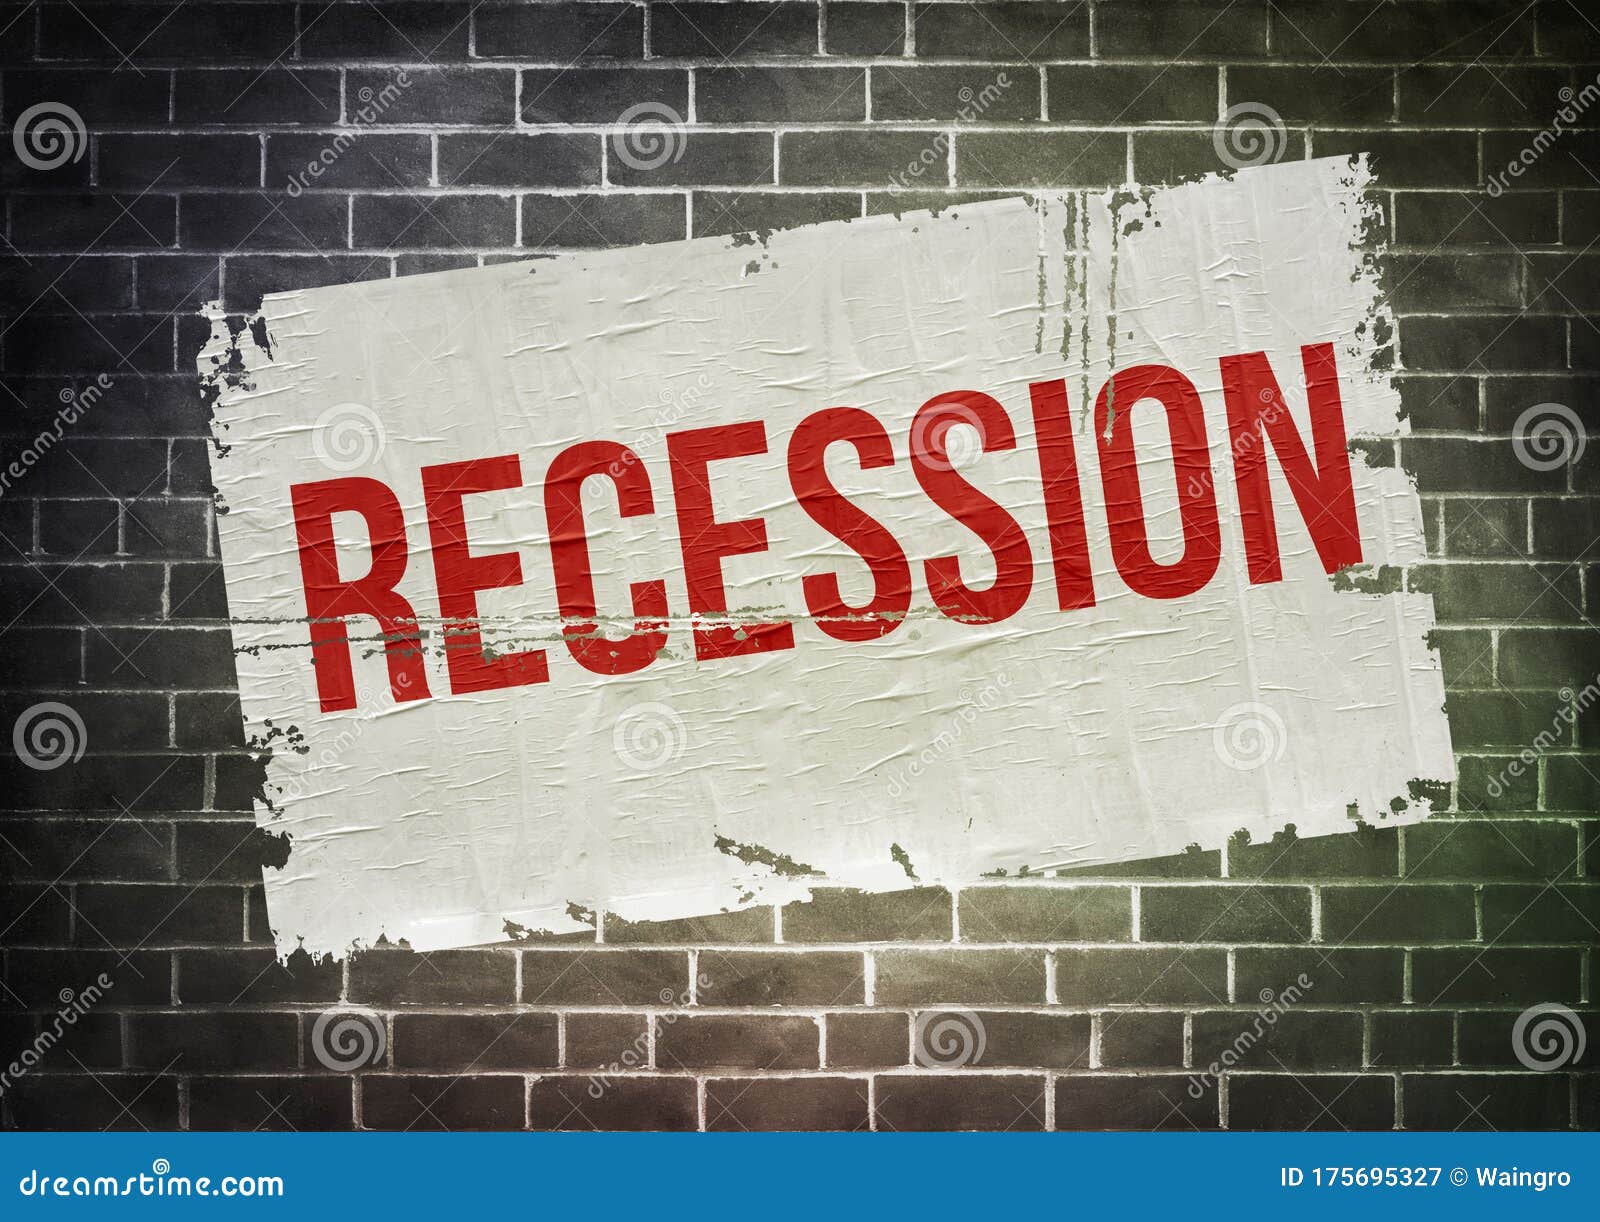 recession - temporary economic decline warning